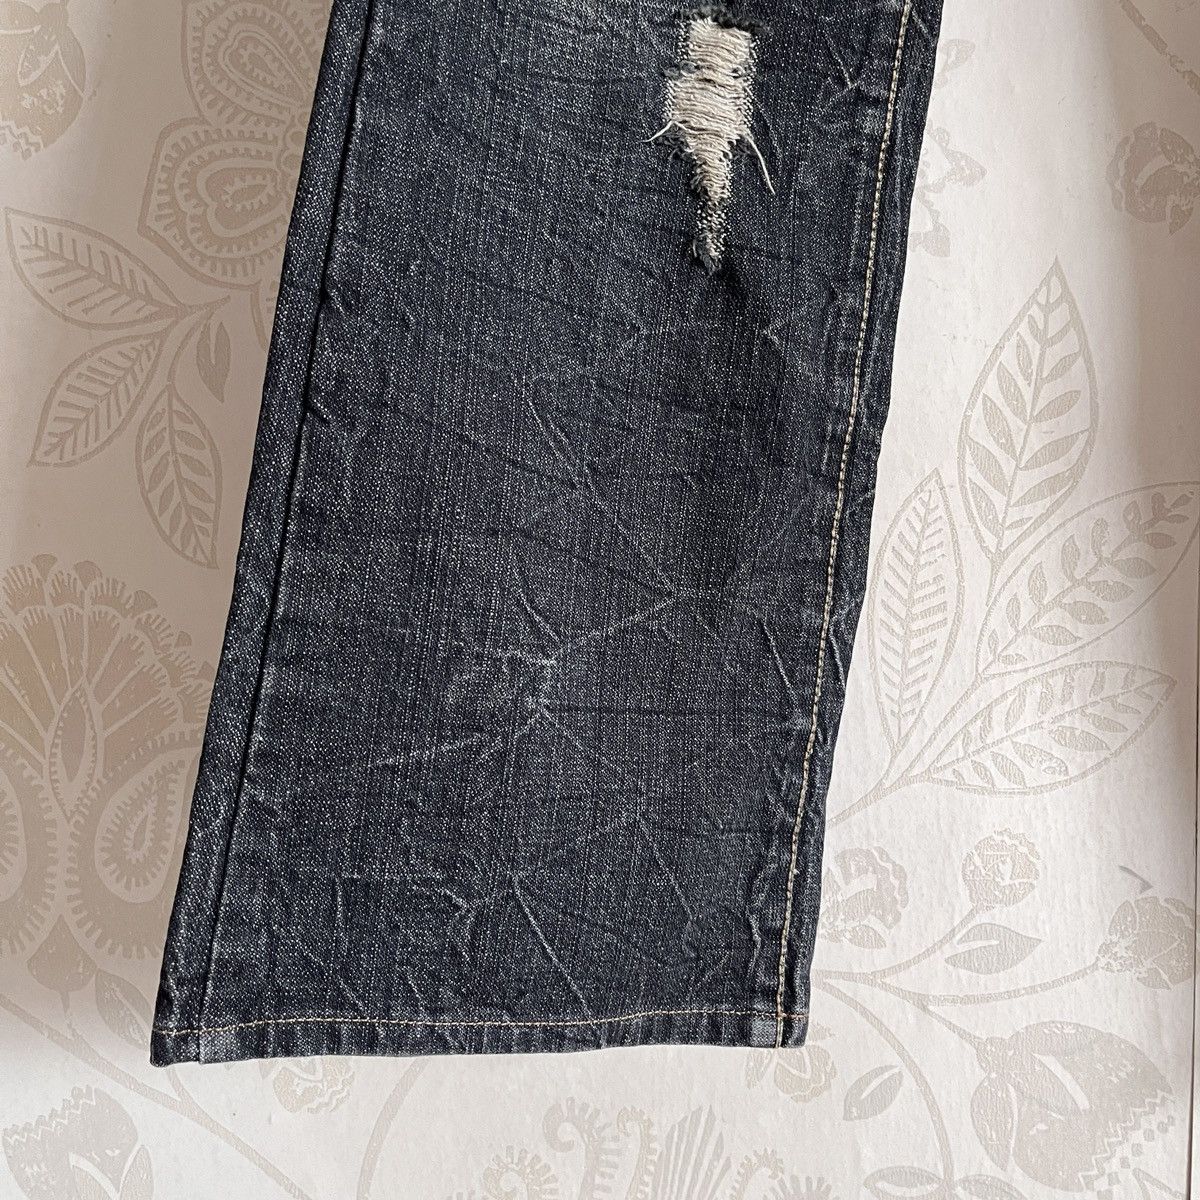 Buzz Rickson's - Rare Distressed Undercover Double Waist Buzz Spunky Jeans - 10